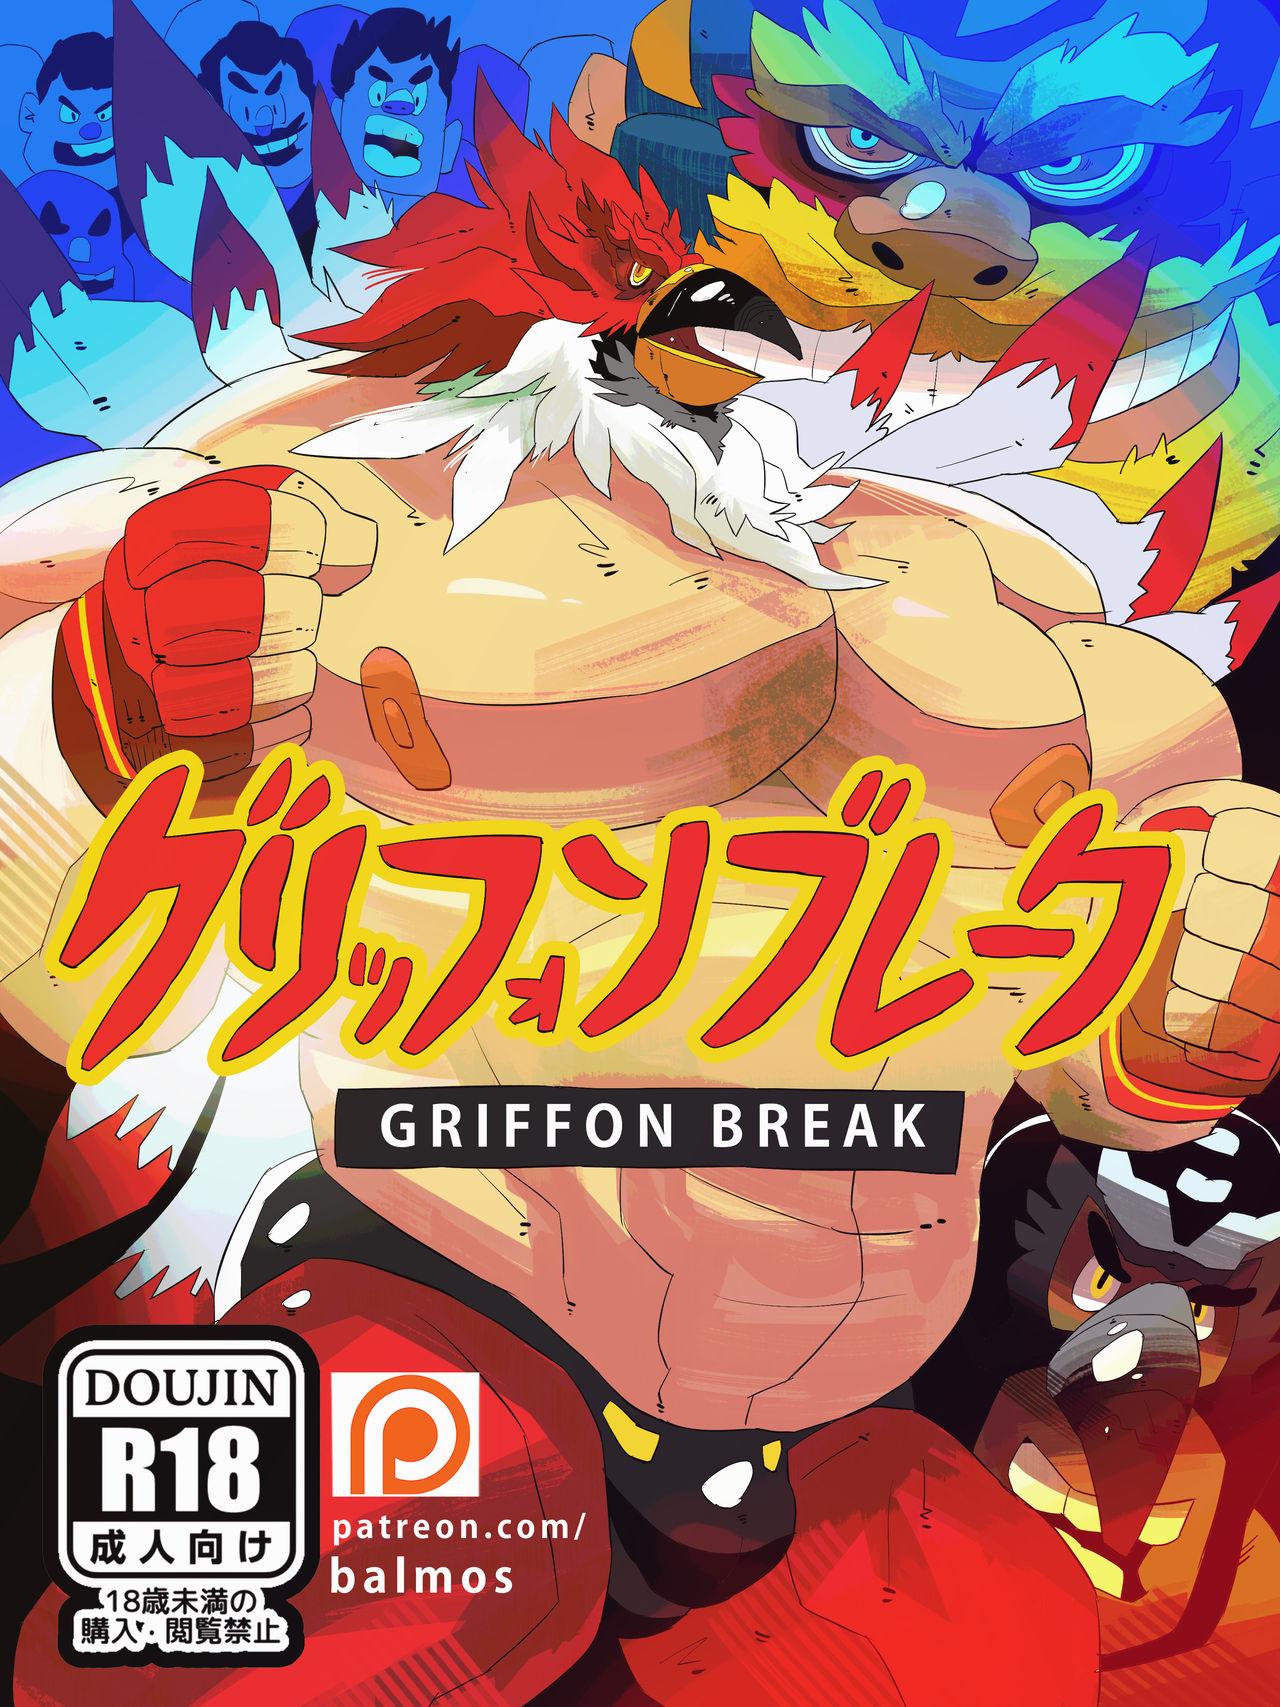 Lez Griffon Break HD - King of fighters Fatal fury | garou densetsu Shemale Porn - Picture 1